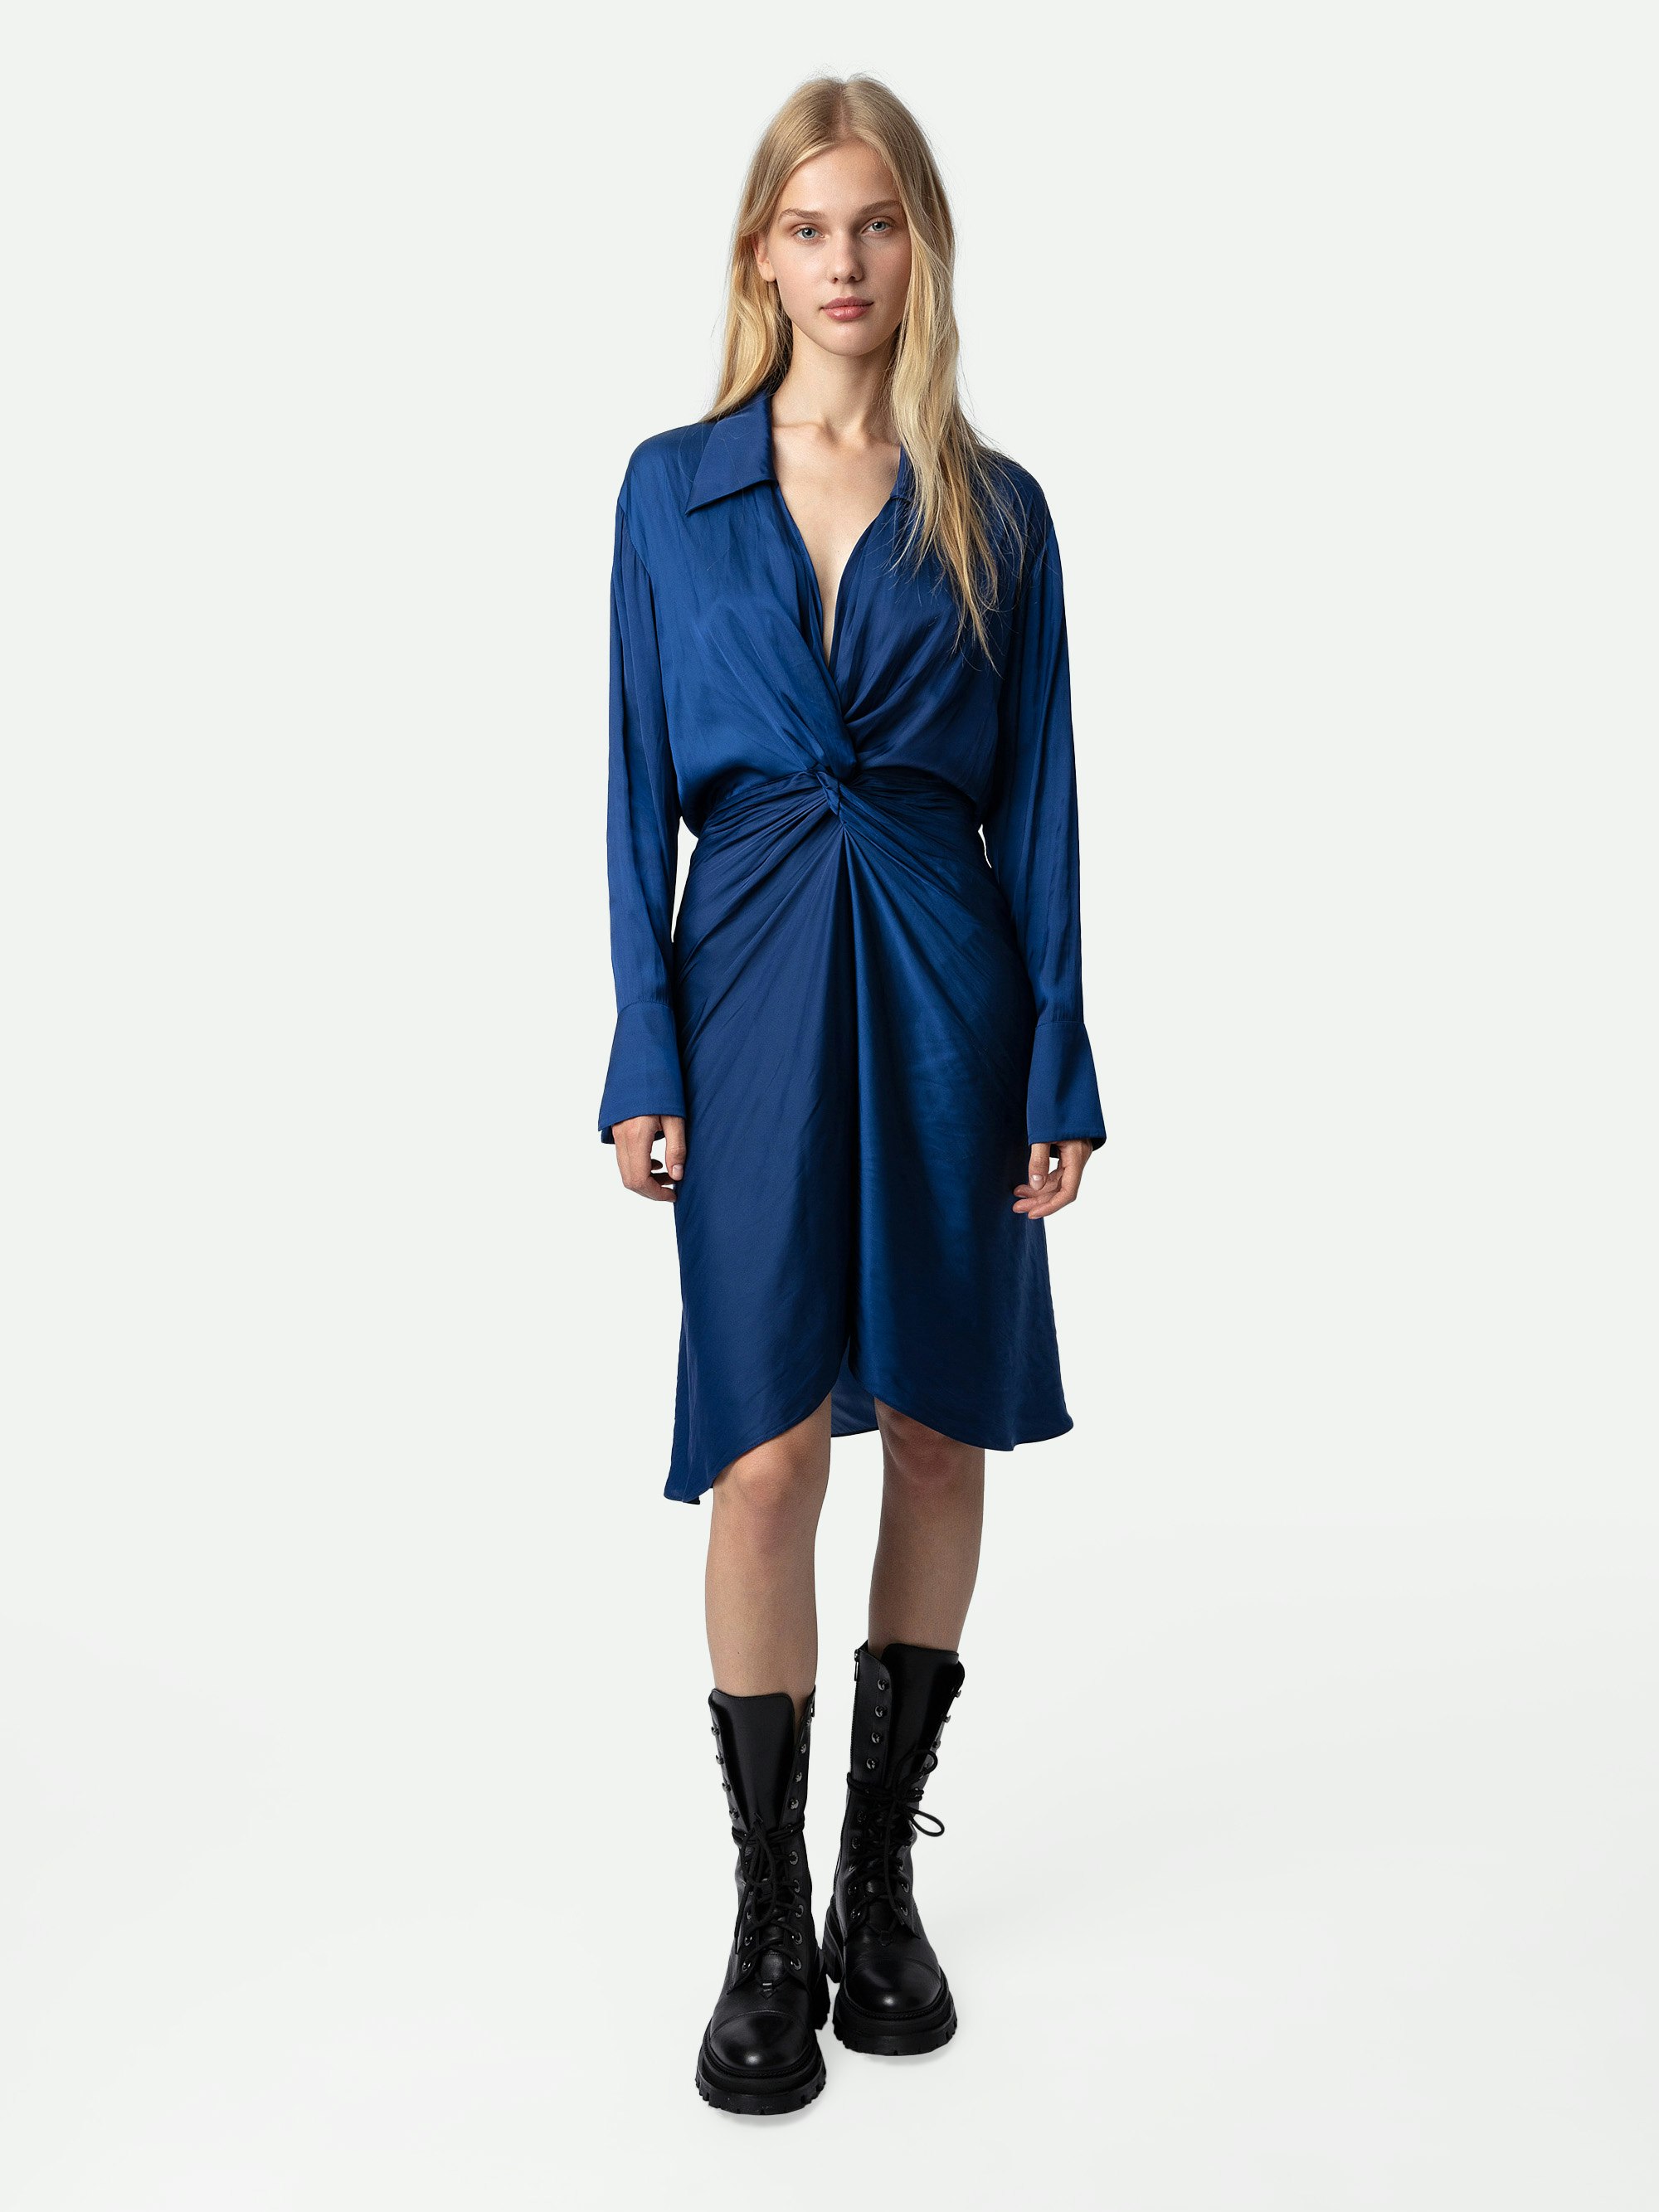 Rozo Satin Dress - Women’s royal blue draped satin midi dress with asymmetric sleeves.